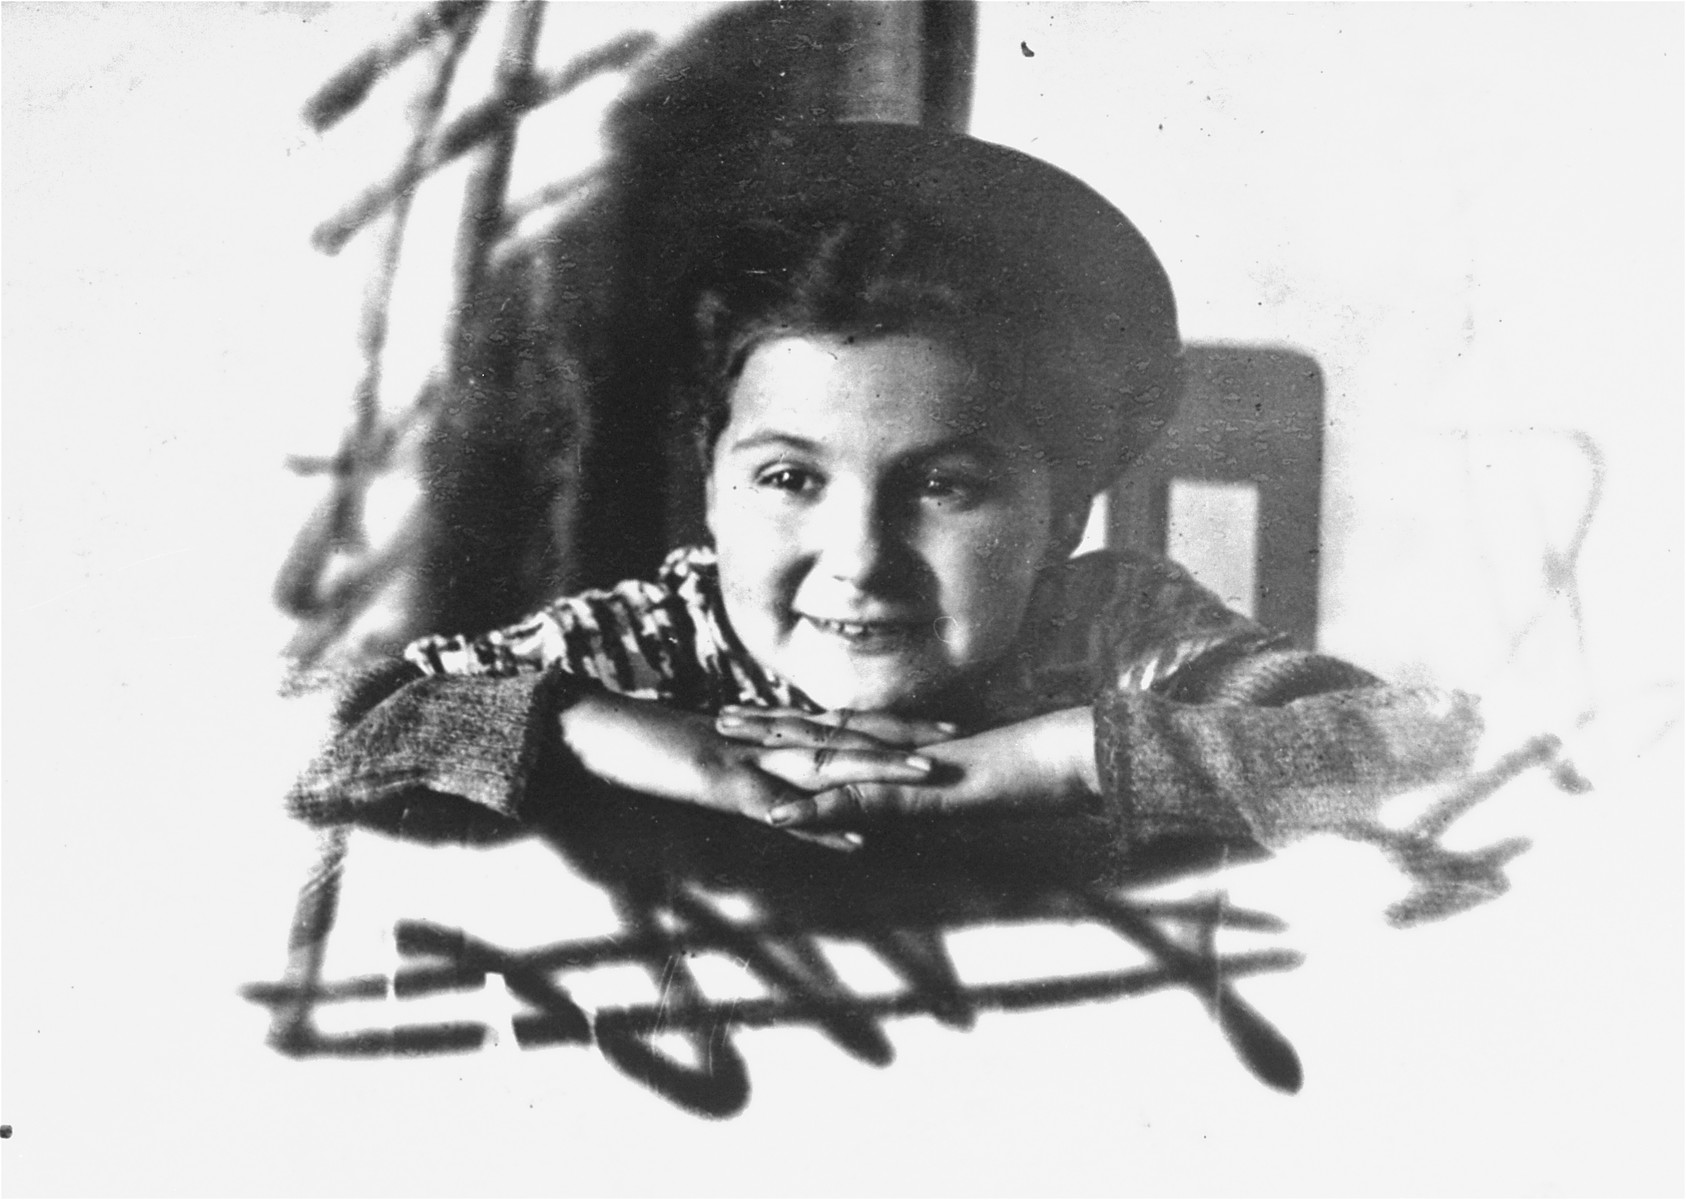 Postwar portrait of Frima Gleiser in the Pocking displaced persons camp.